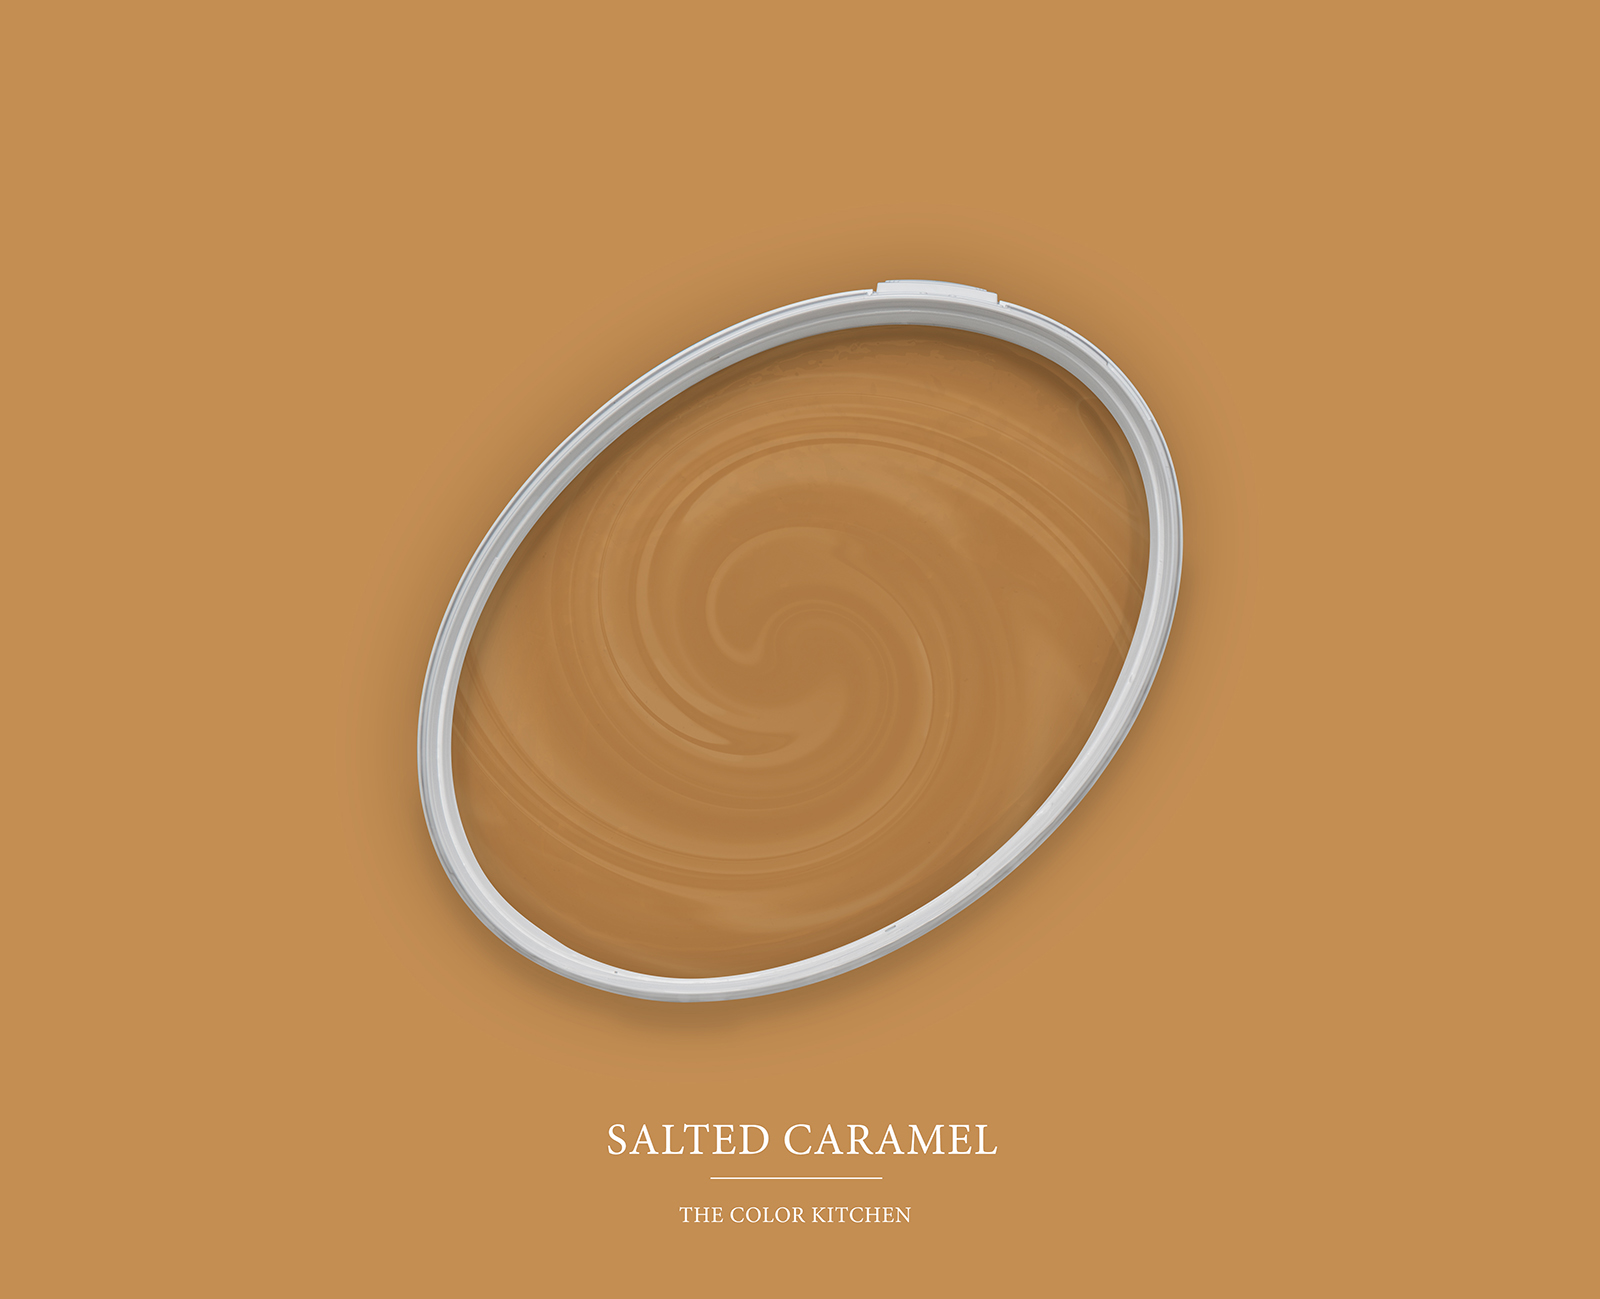         Wandfarbe in intensivem Caramel »Salted Caramel« TCK5007 – 2,5 Liter
    